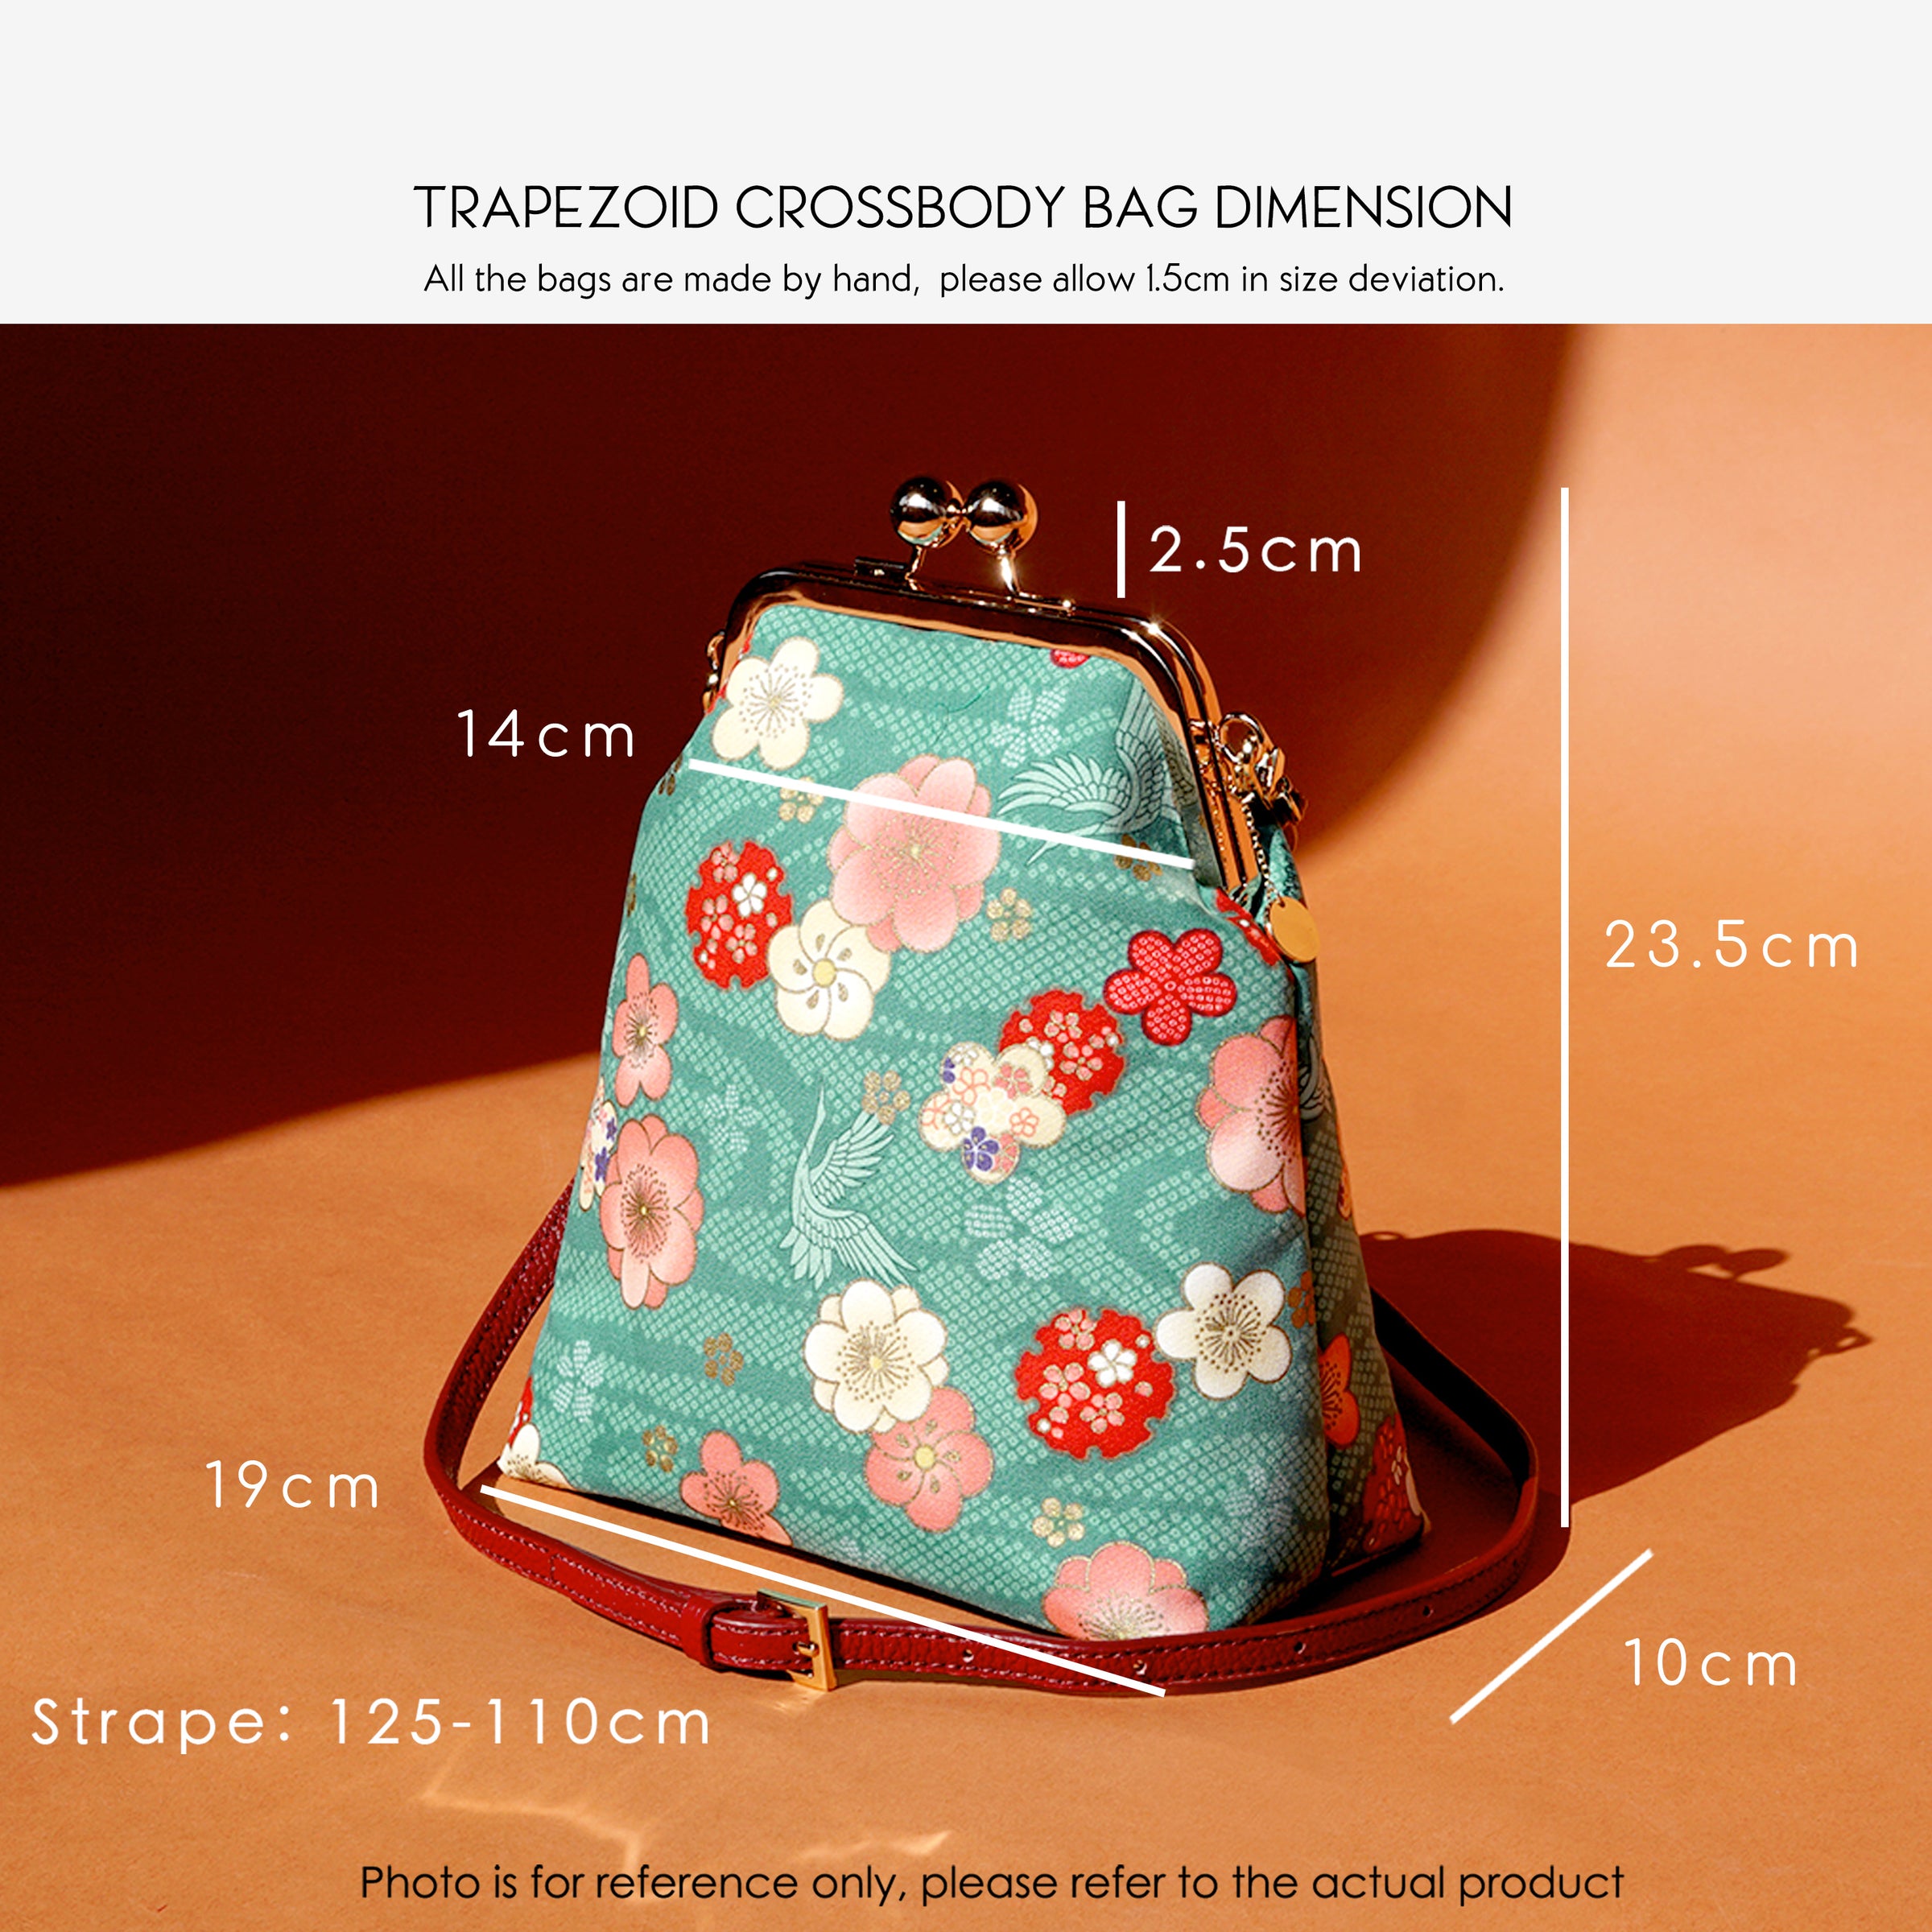 Trapezoid Crossbody Bag - Cotton Candy